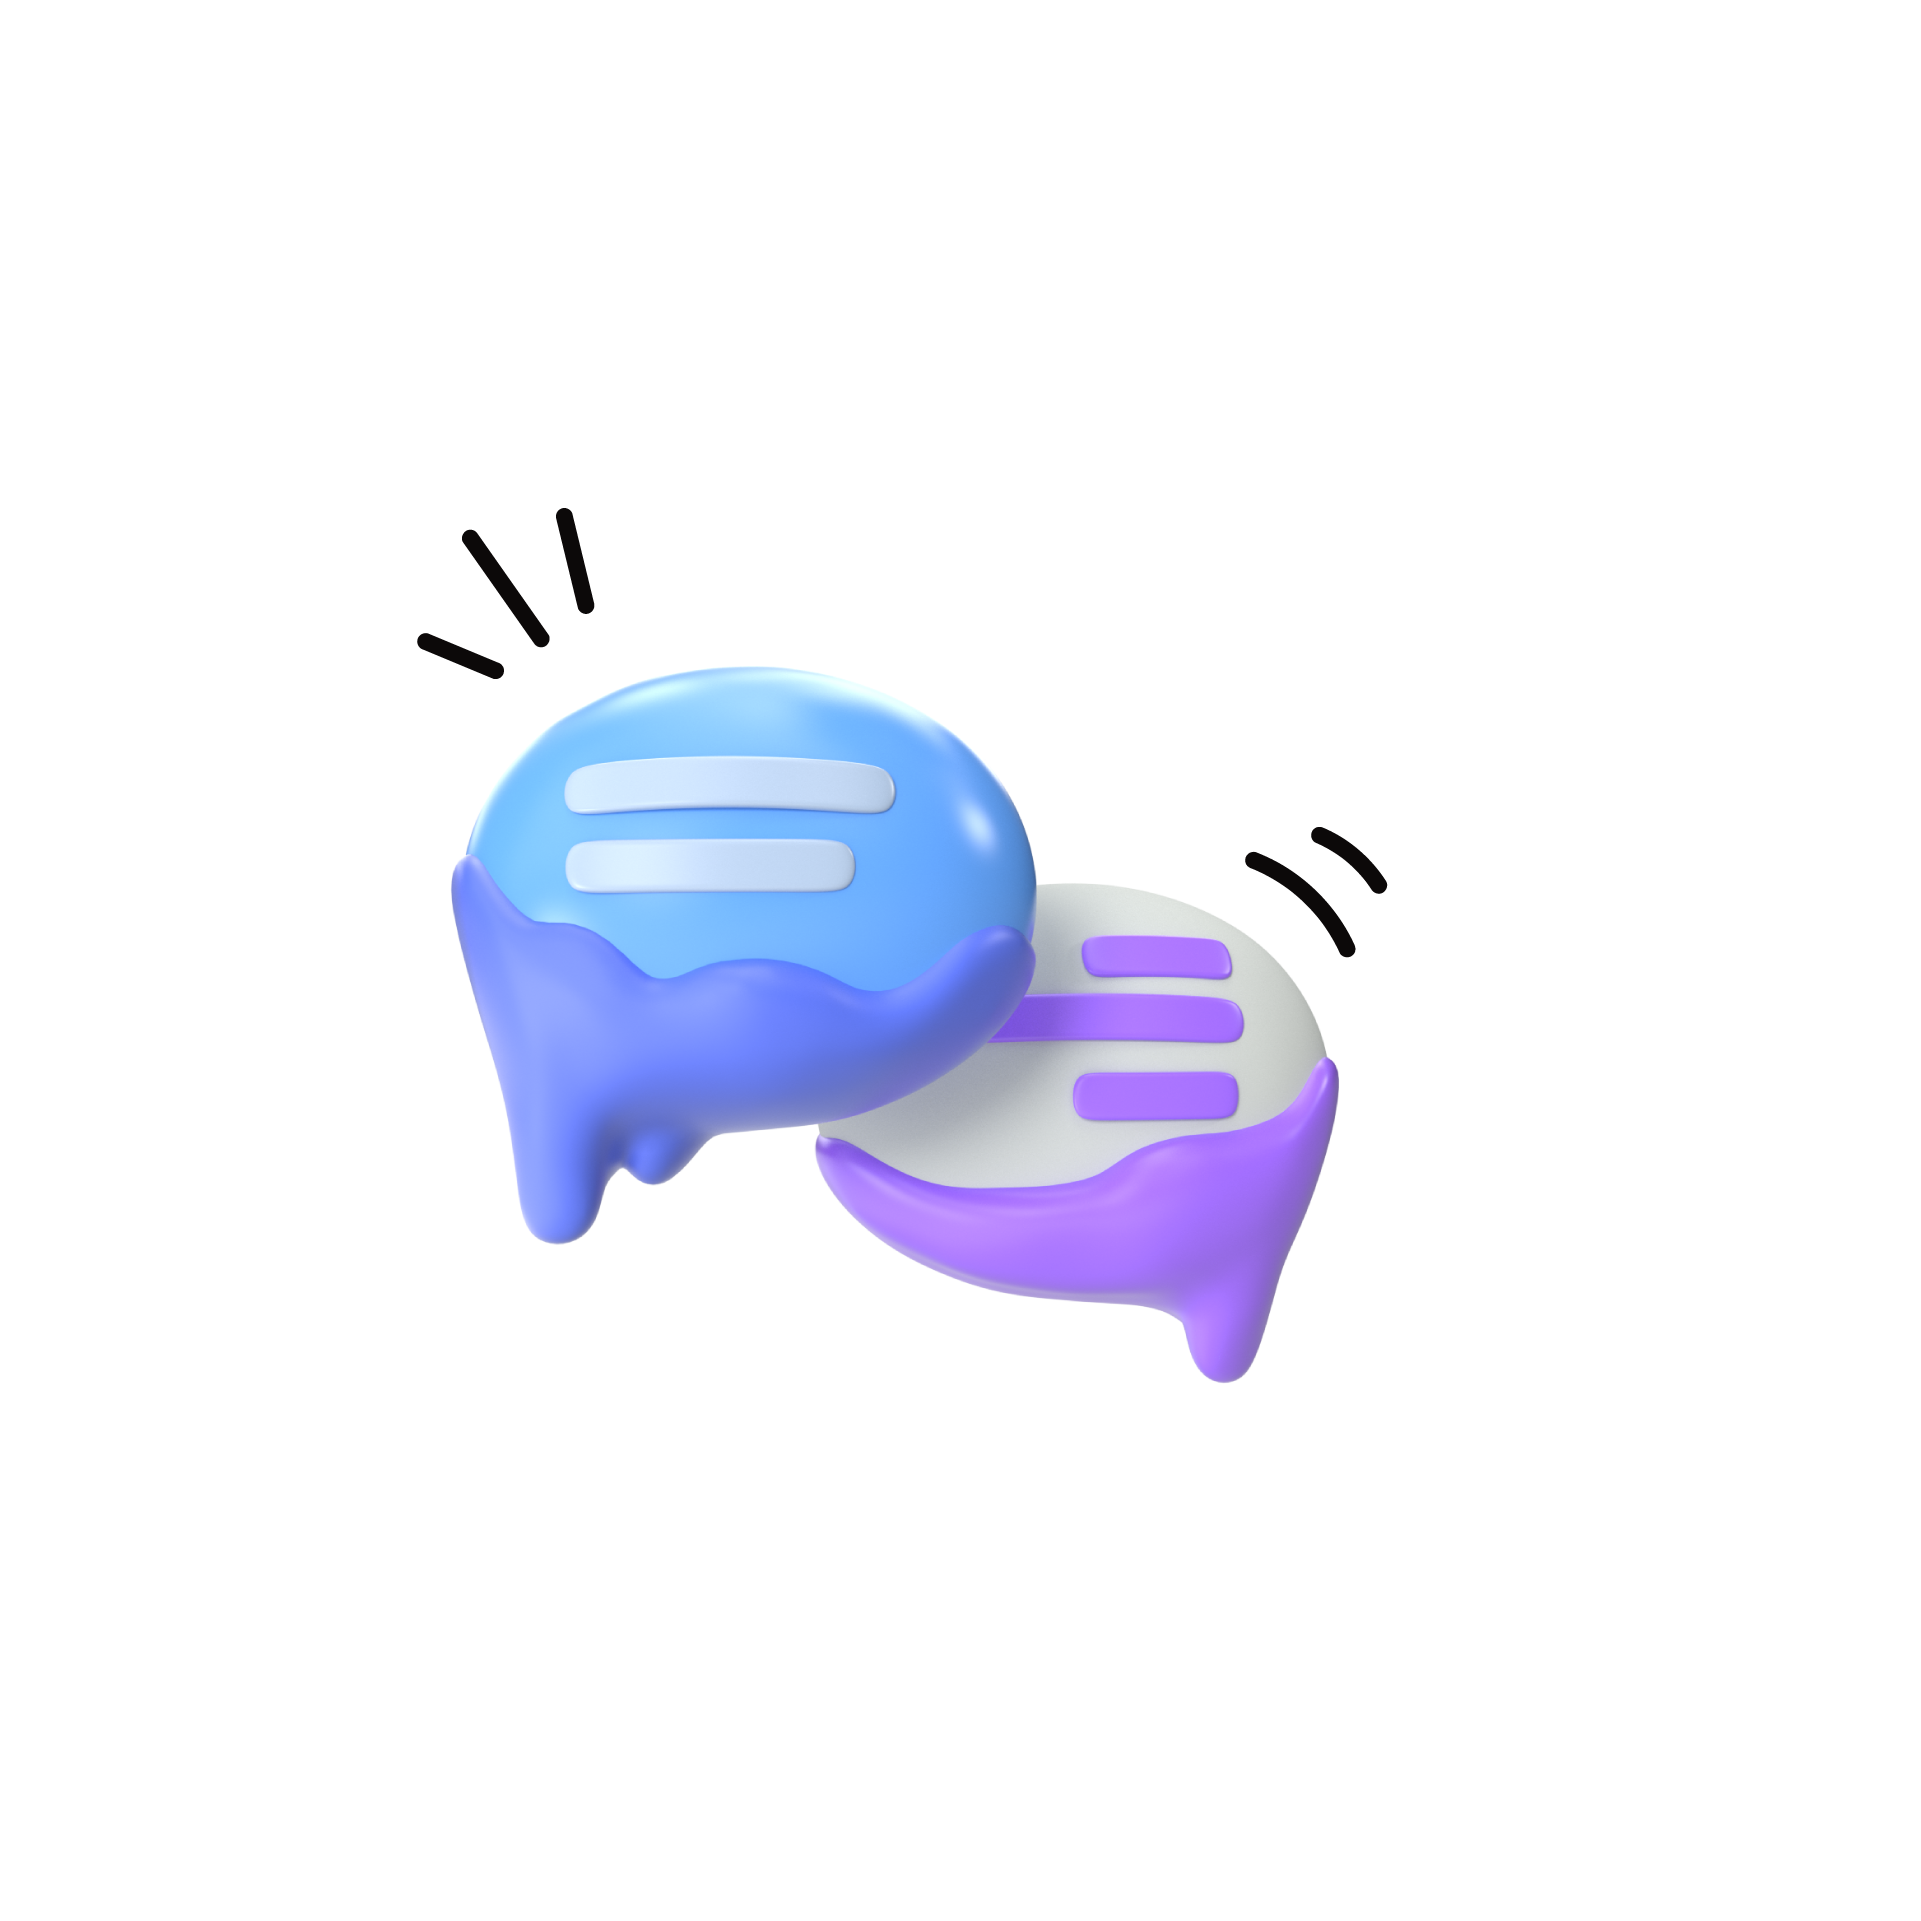 Two chat emoji